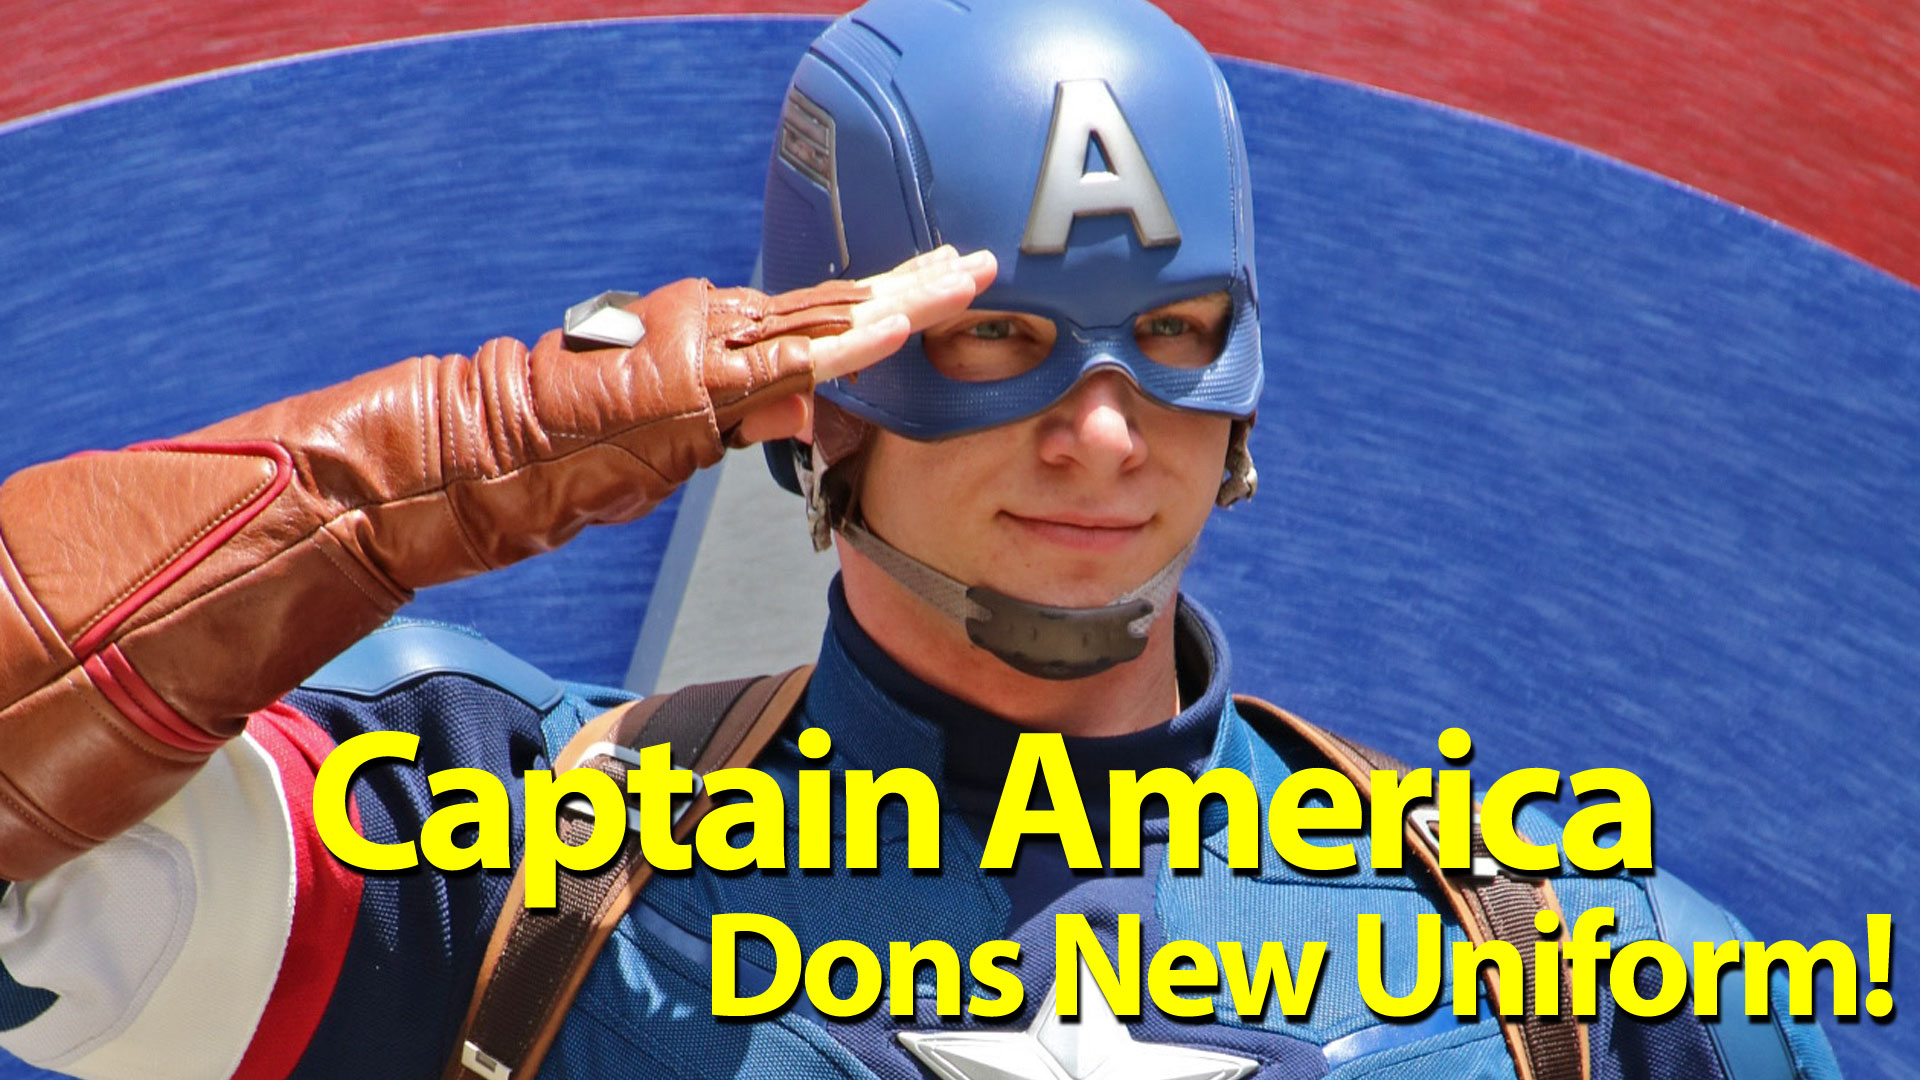 Captain America Dons New Uniform at New Location in Disney California Adventure